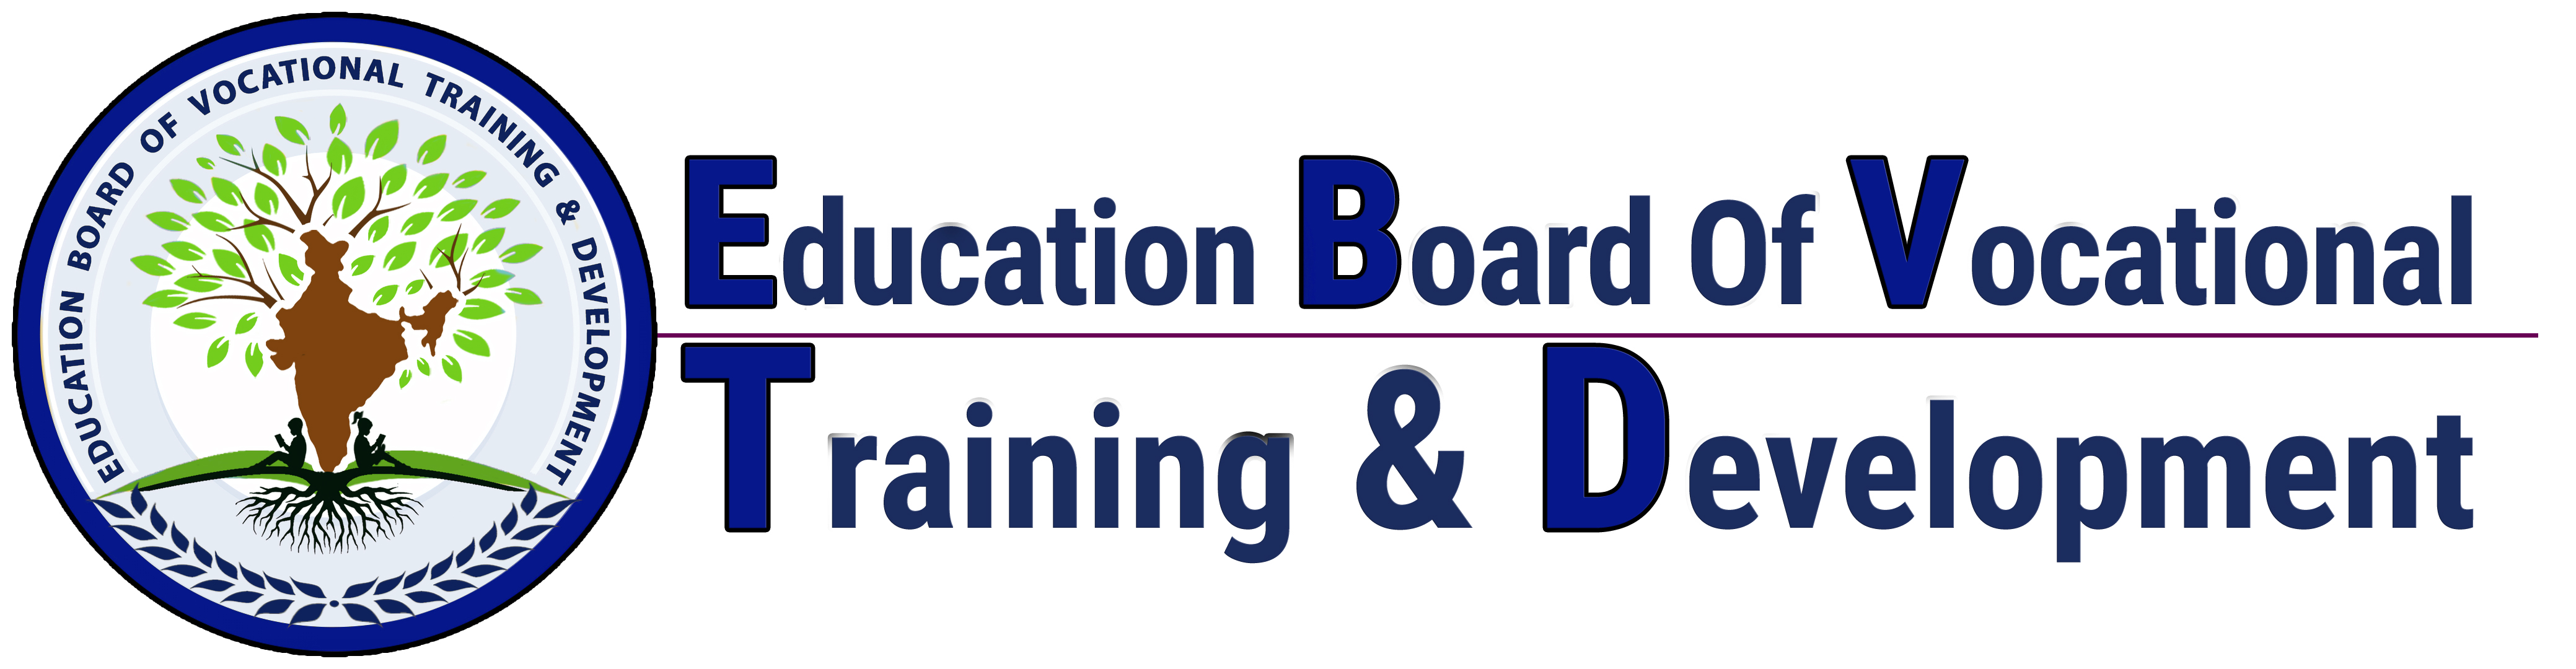 Education Board Of Vocational Training & Development